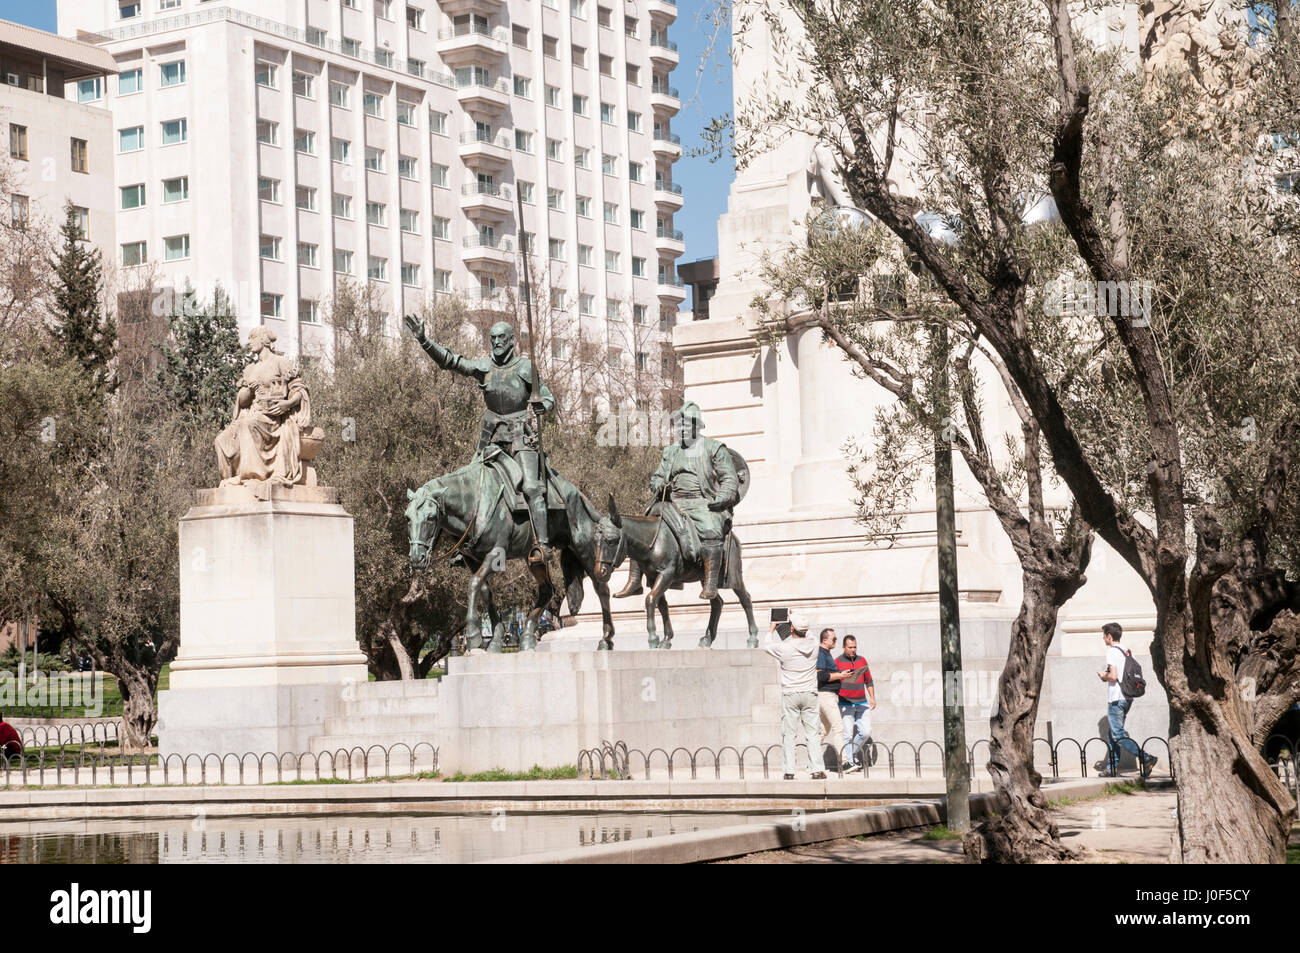 Statues of Don Quixote and Sancho Panza, Monument to Miguel de Cervantes, Plaza de Espa?a, Madrid, Spain Stock Photo